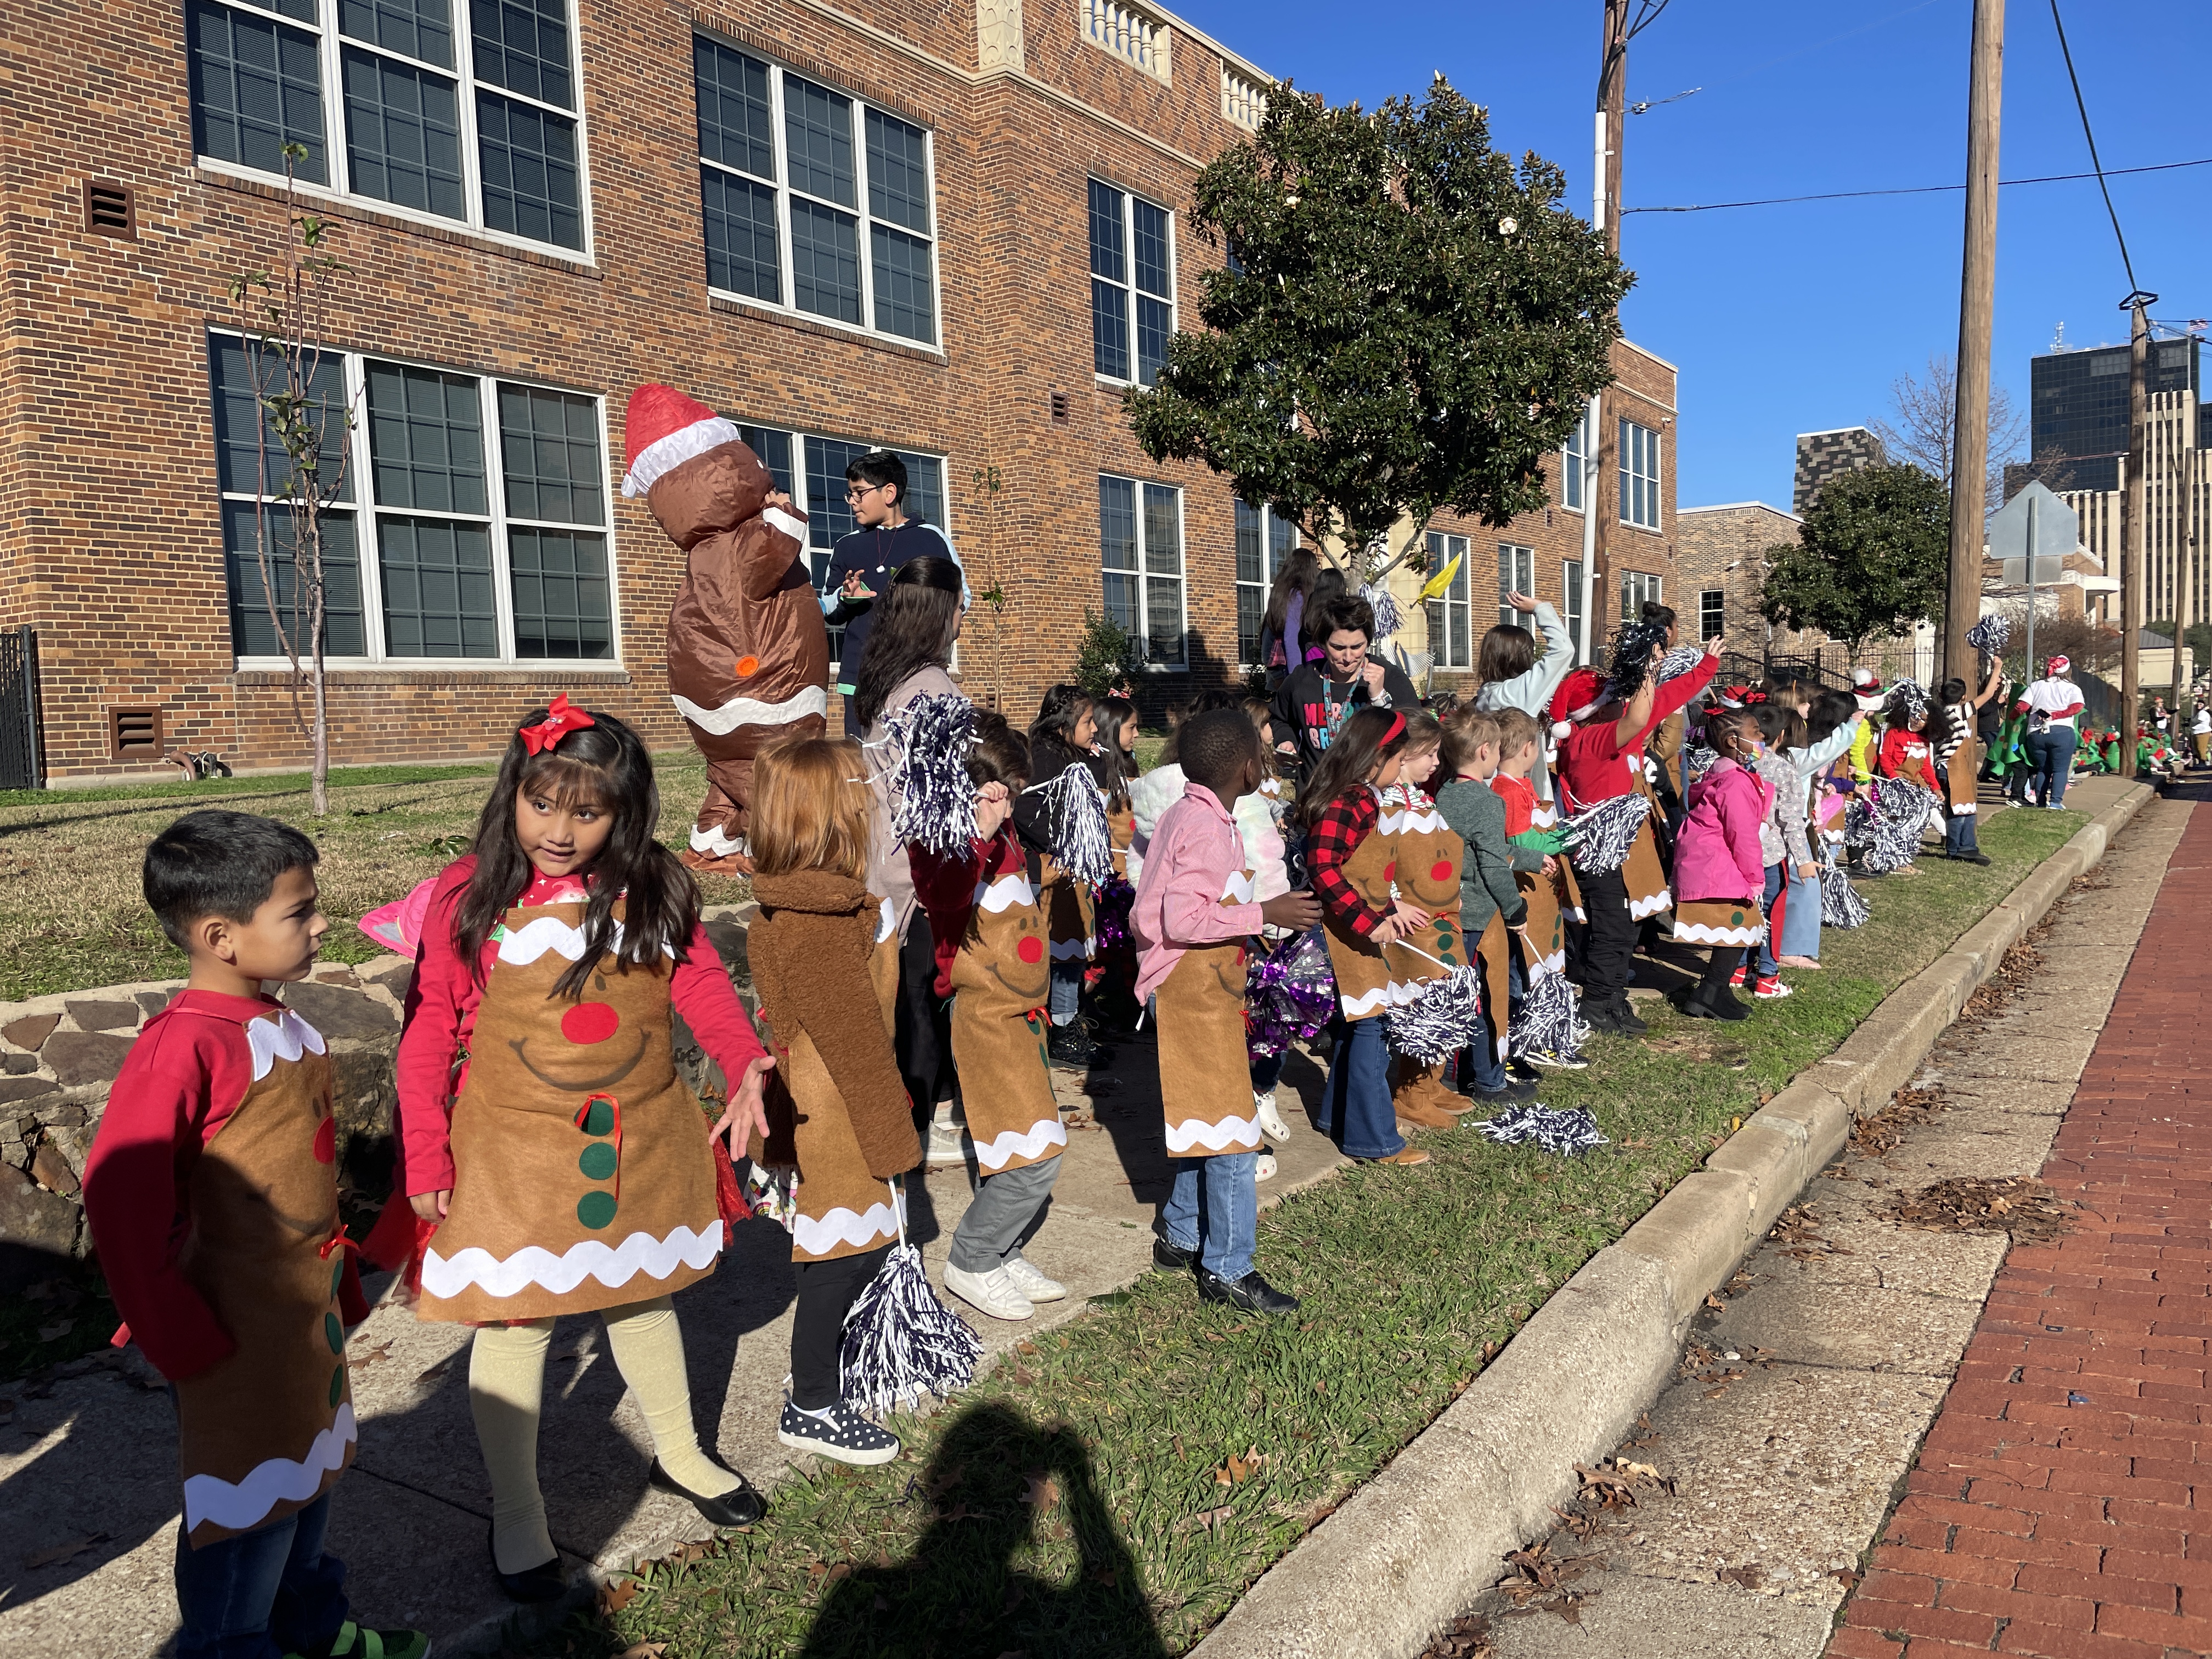 children along the sidewalk dressed in Christmas attire